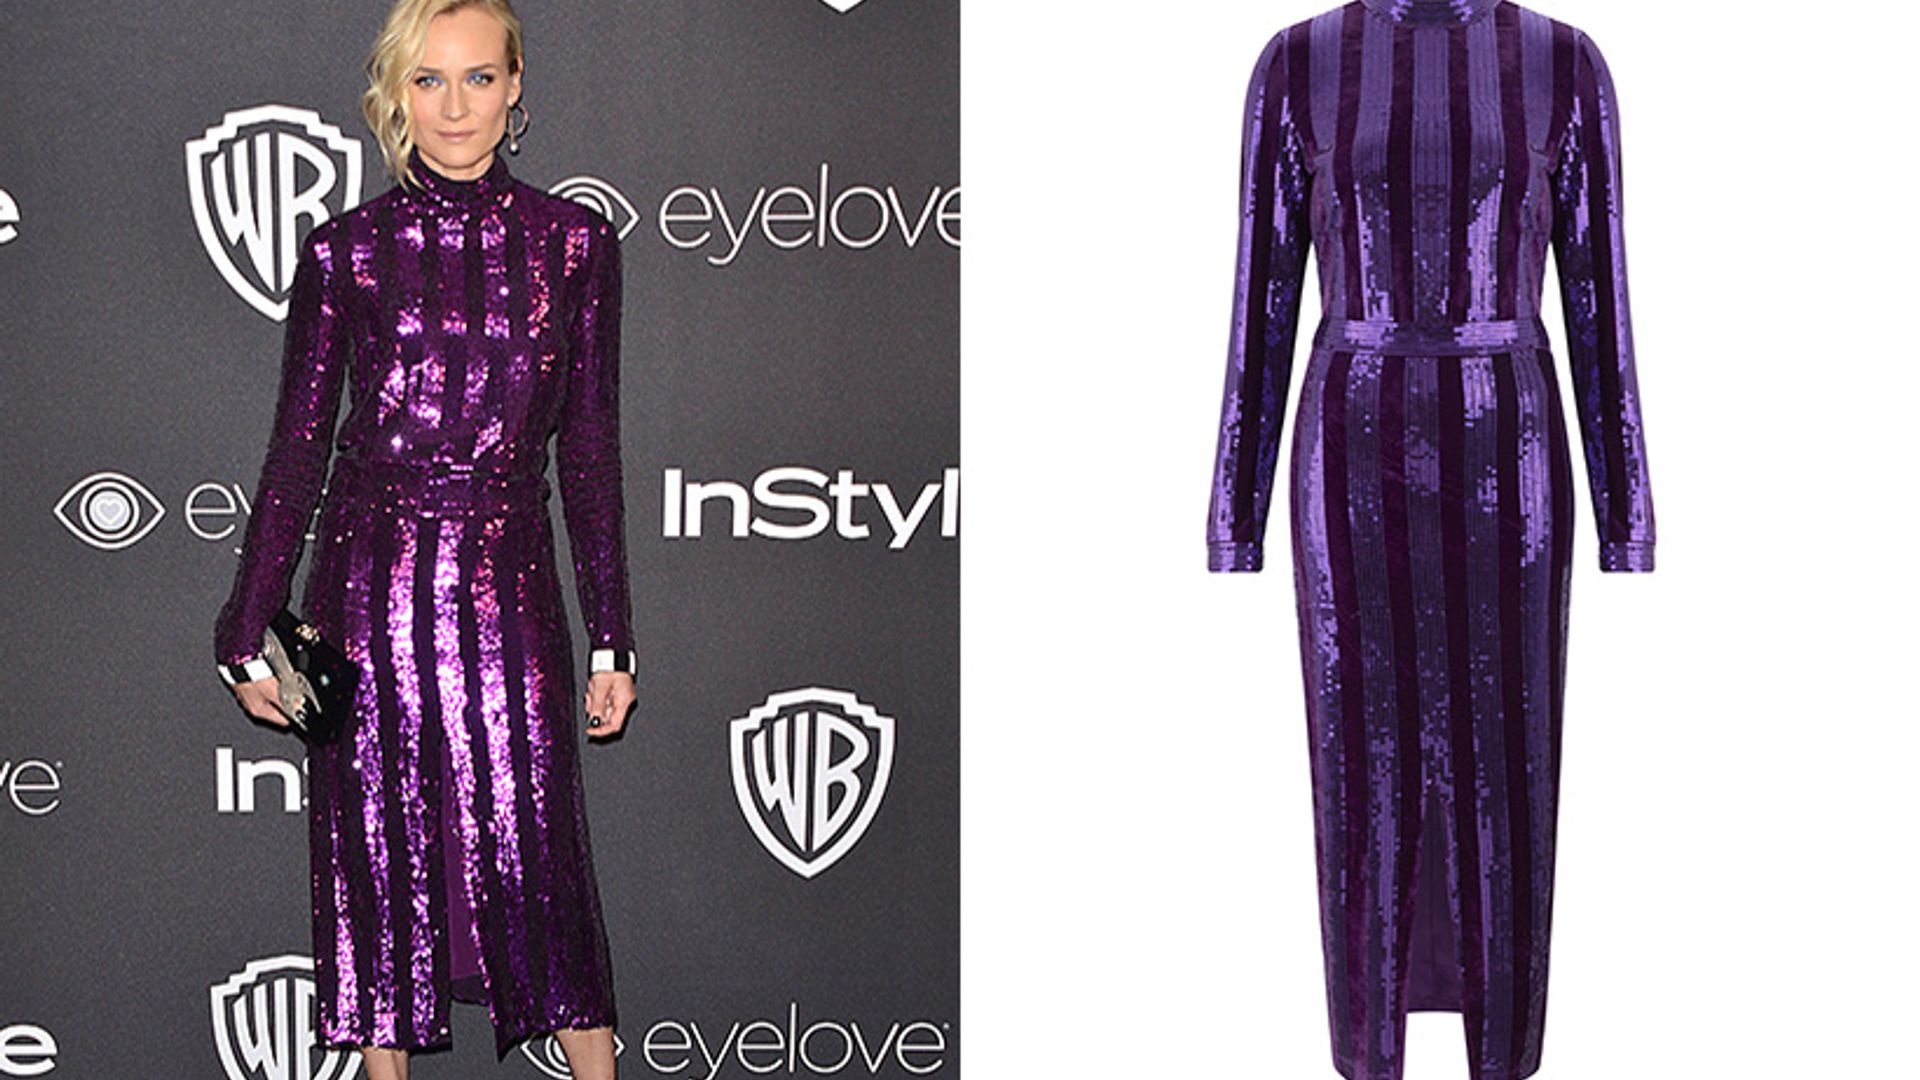 Get Diane Kruger's Nina Ricci style dress for £1,900 less!